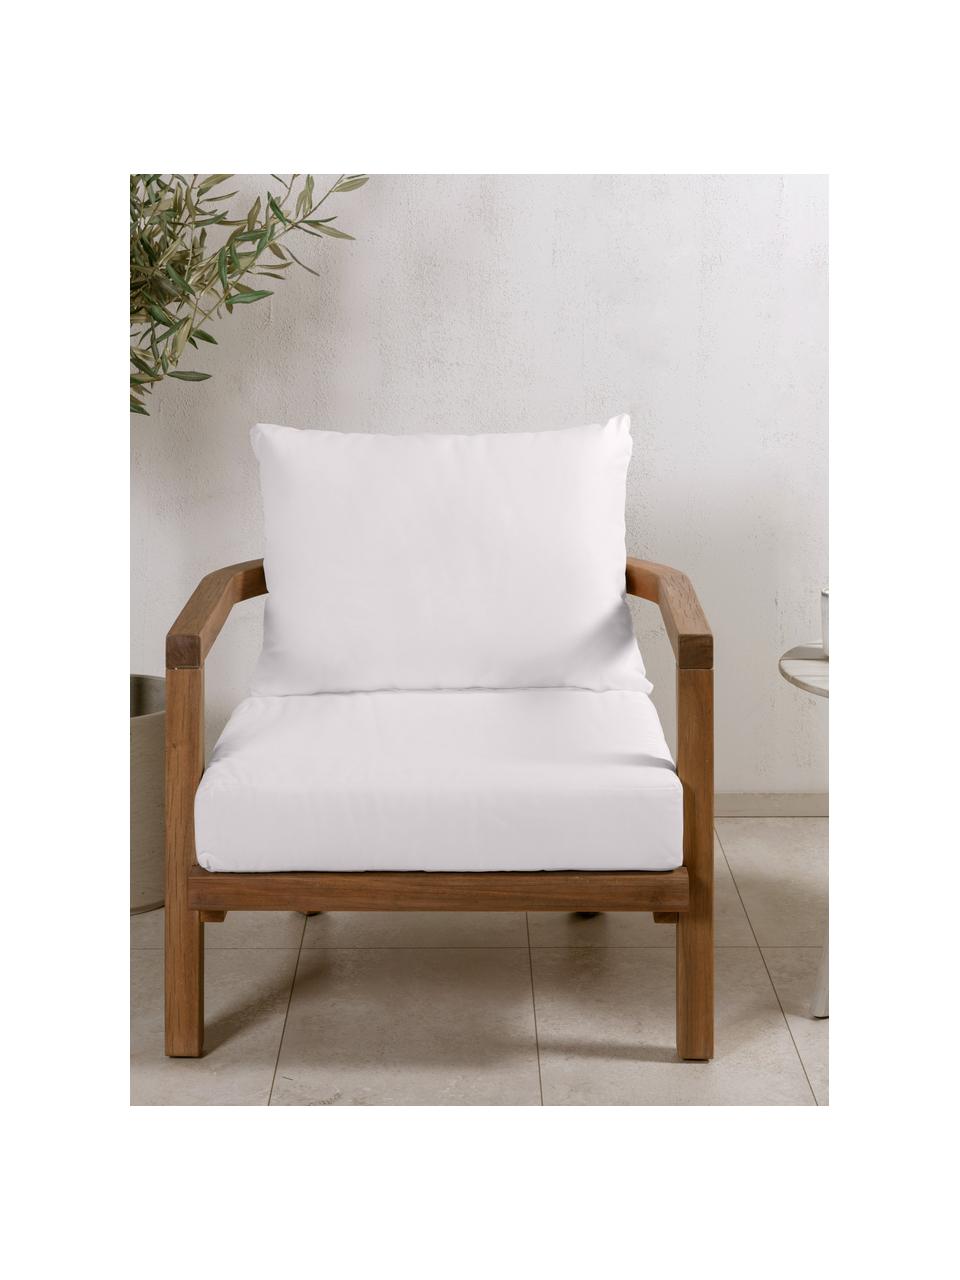 Chaise de jardin en bois d'acacia Erica, Tissu blanc crème, bois d'acacia, larg. 71 x haut. 55 cm